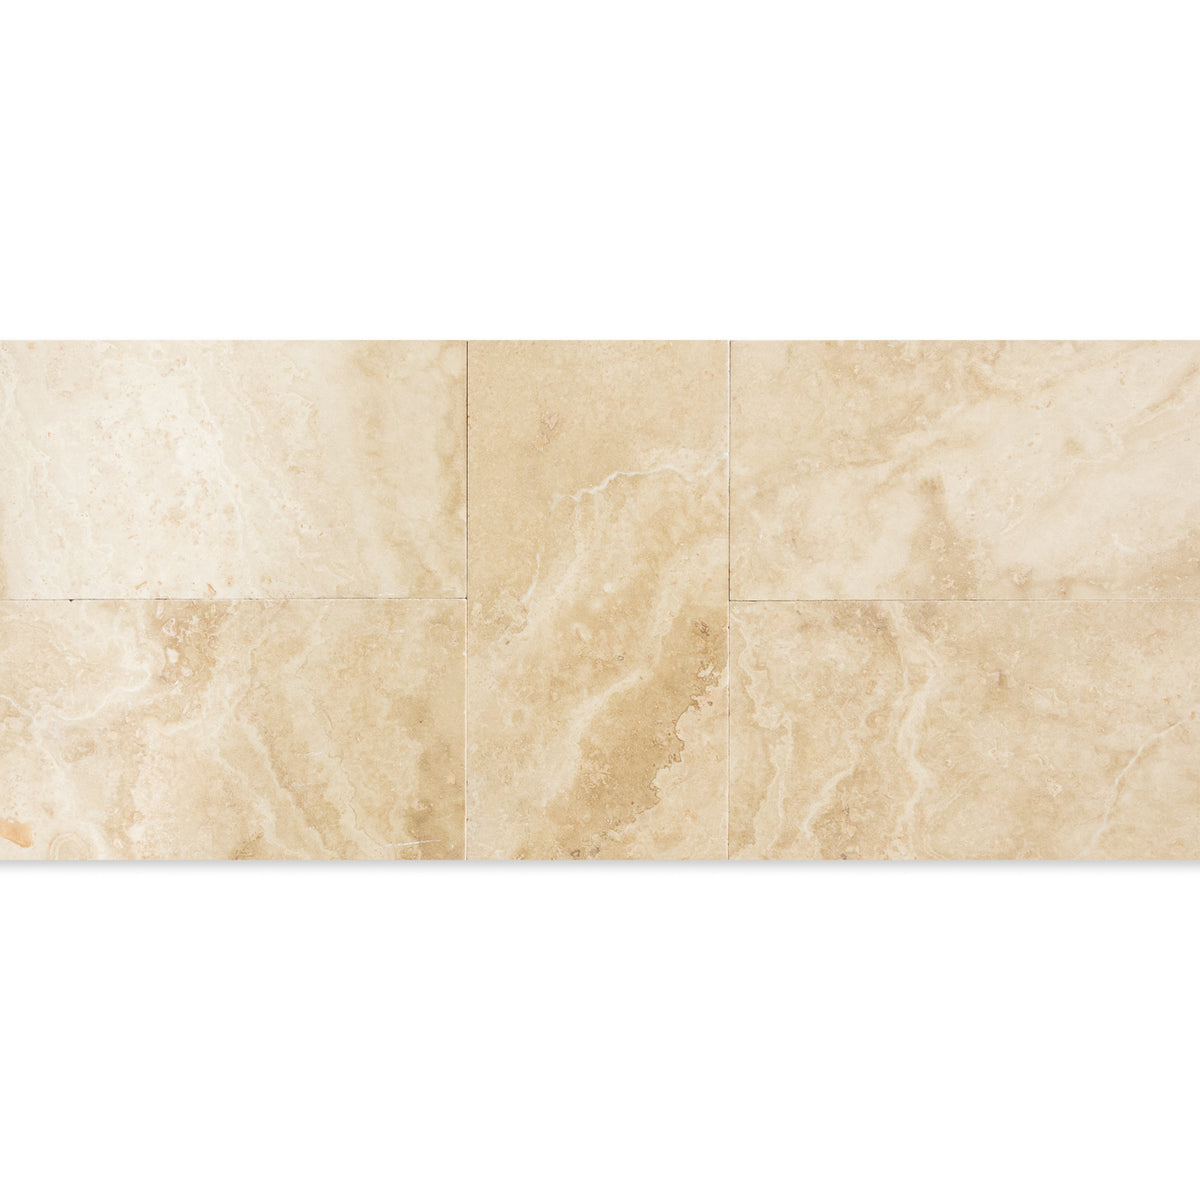 6x12” Carmel Travertine Tile in Honed Finish Main Product Slider View